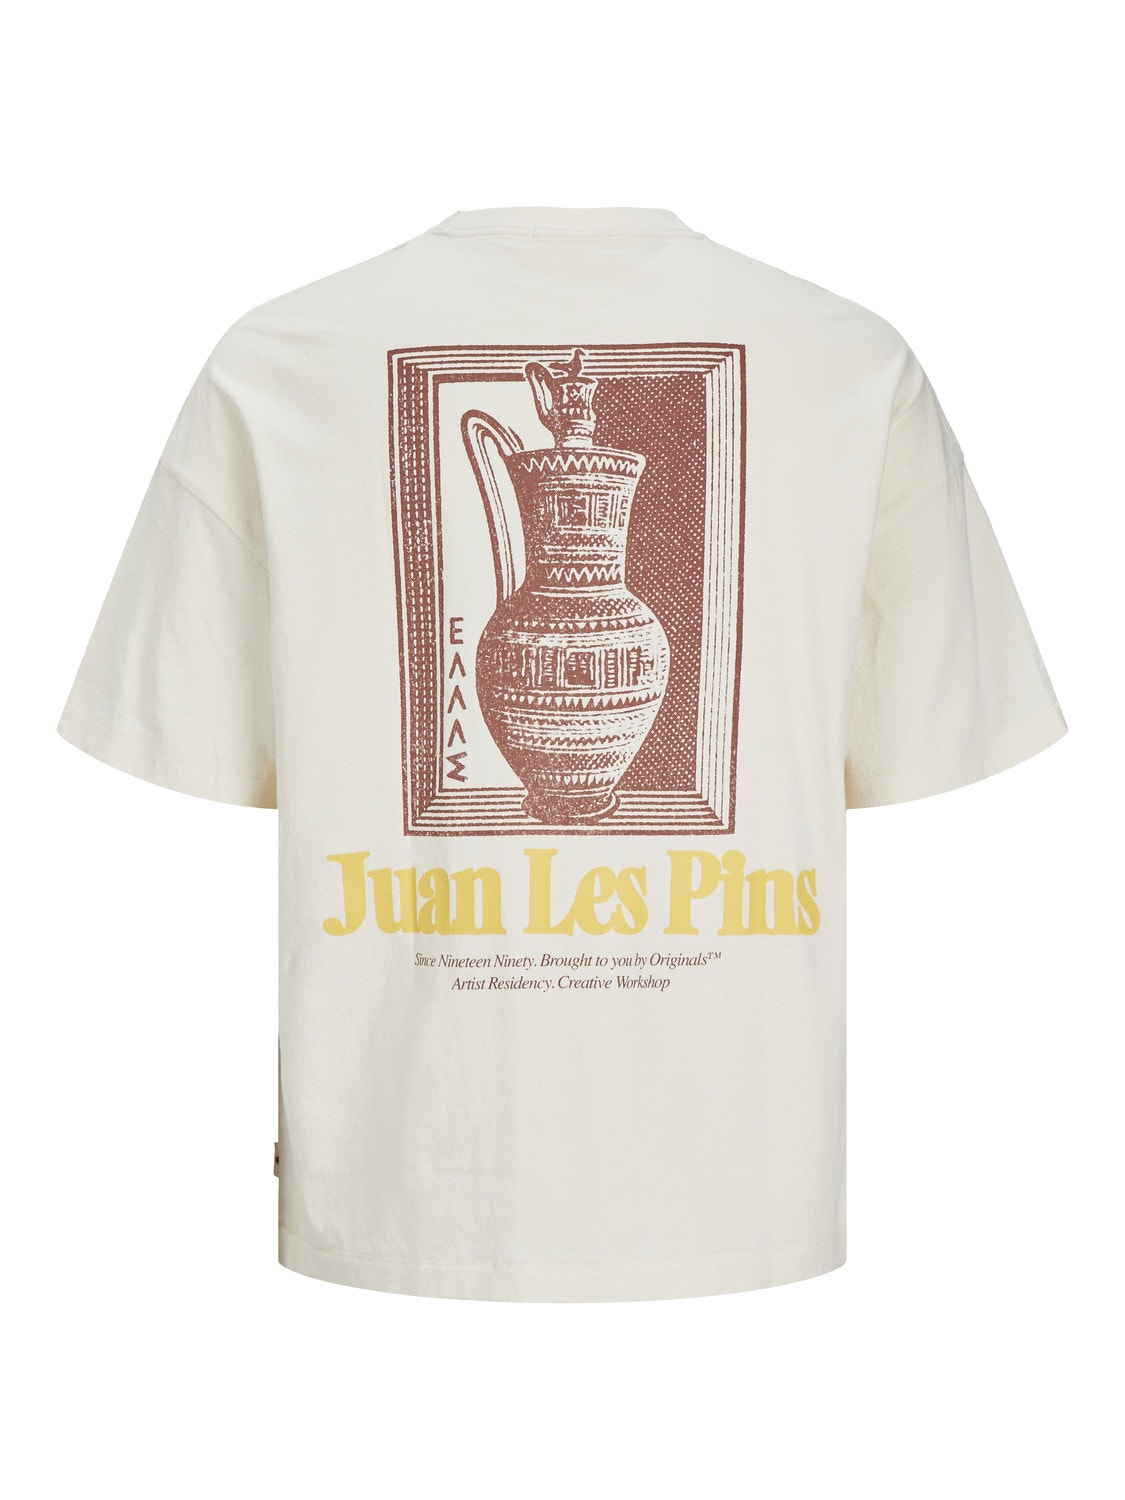 Jack & Jones Oversize Fit Crew neck T-Shirt -Buttercream - 12256330